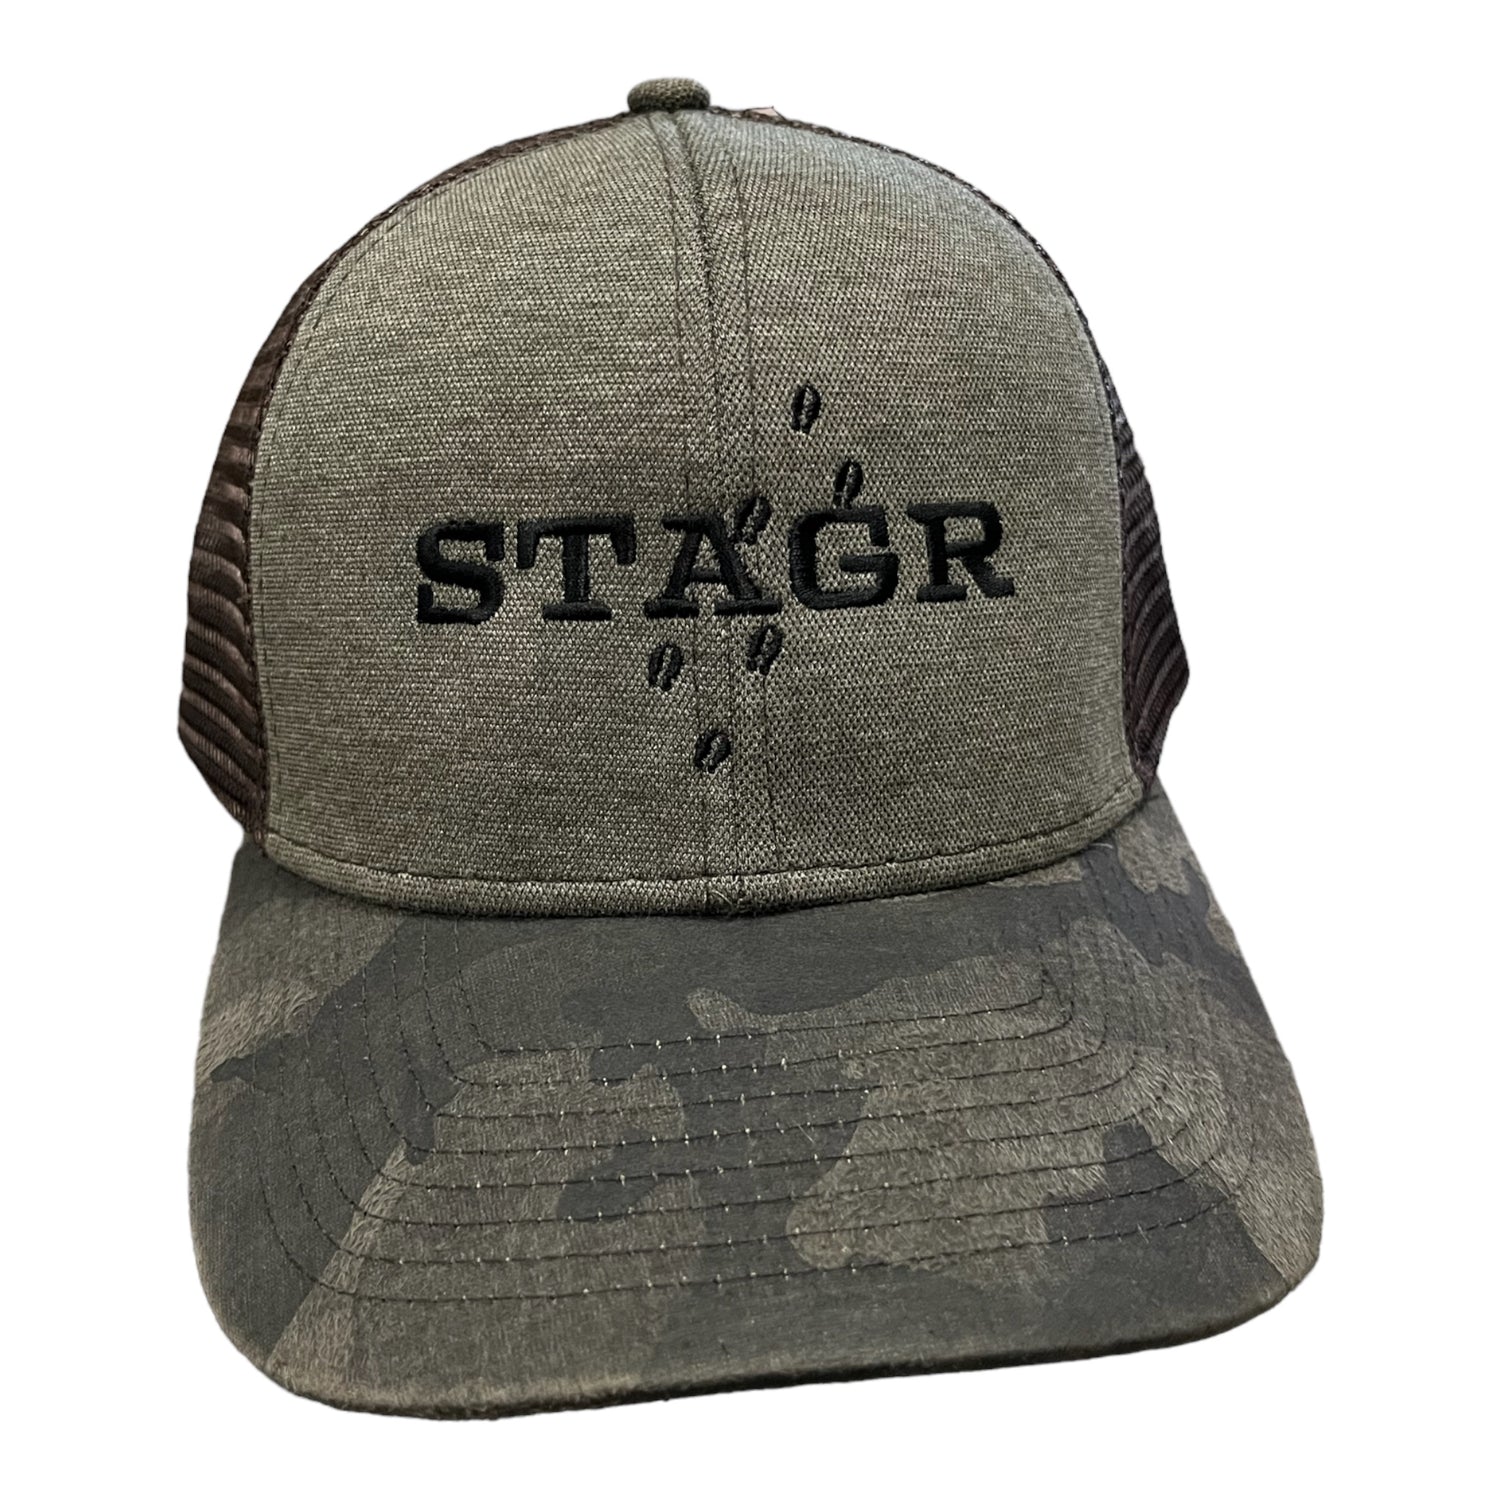 STAGR Performace Dri-Duck Hat